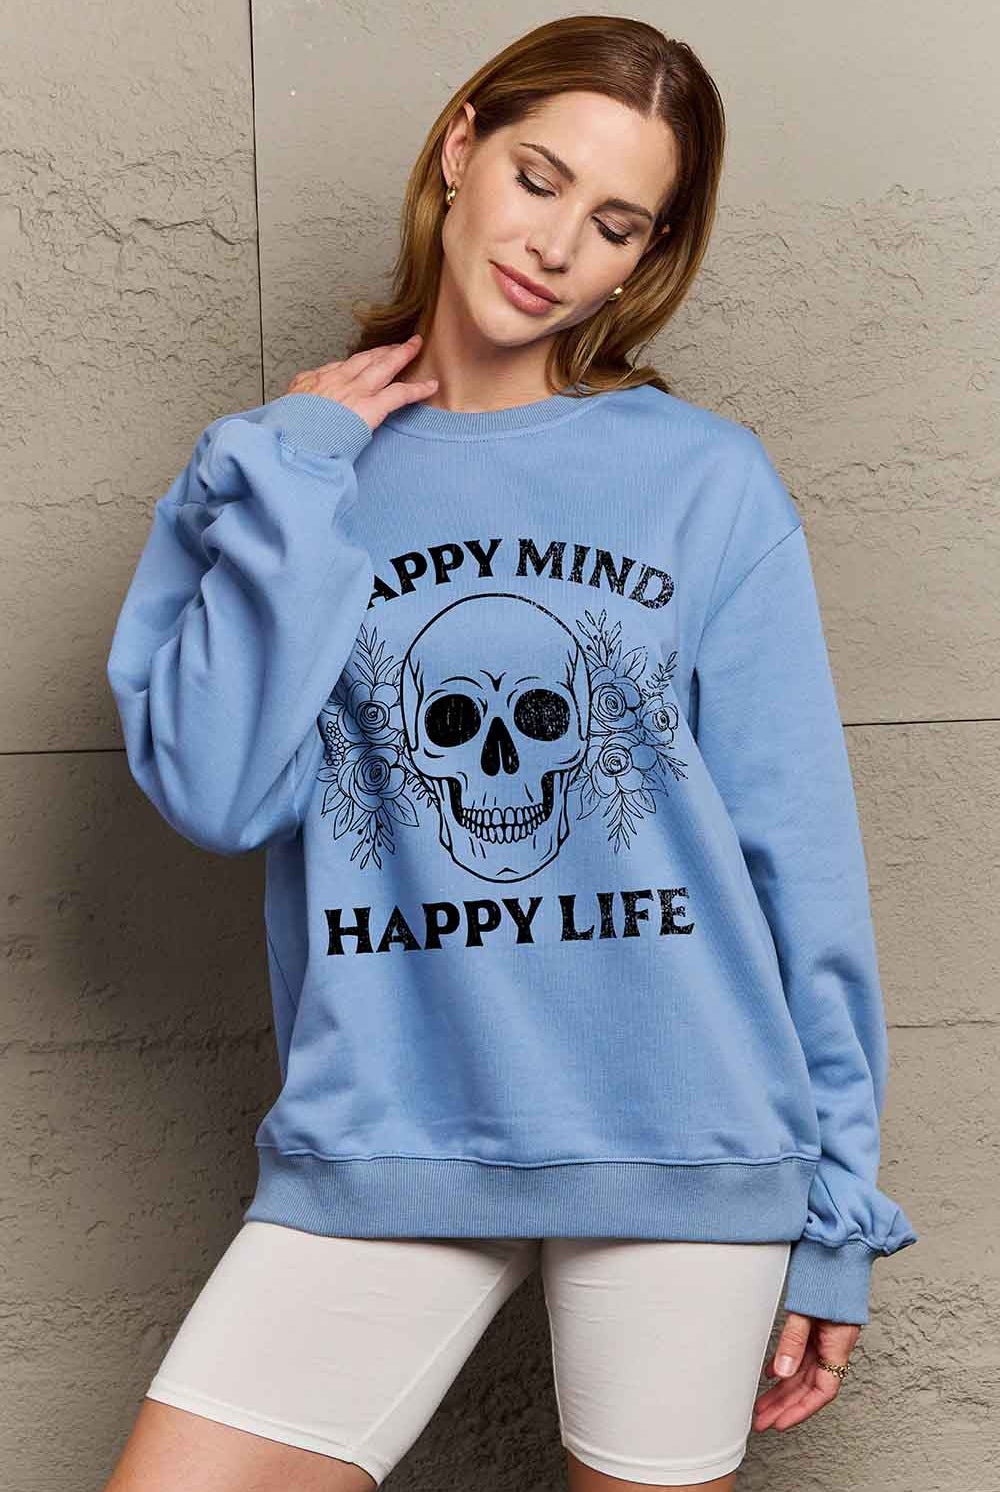 Dark Gray Simply Love Simply Love Full Size HAPPY MIND HAPPY LIFE SKULL Graphic Sweatshirt Sweatshirts